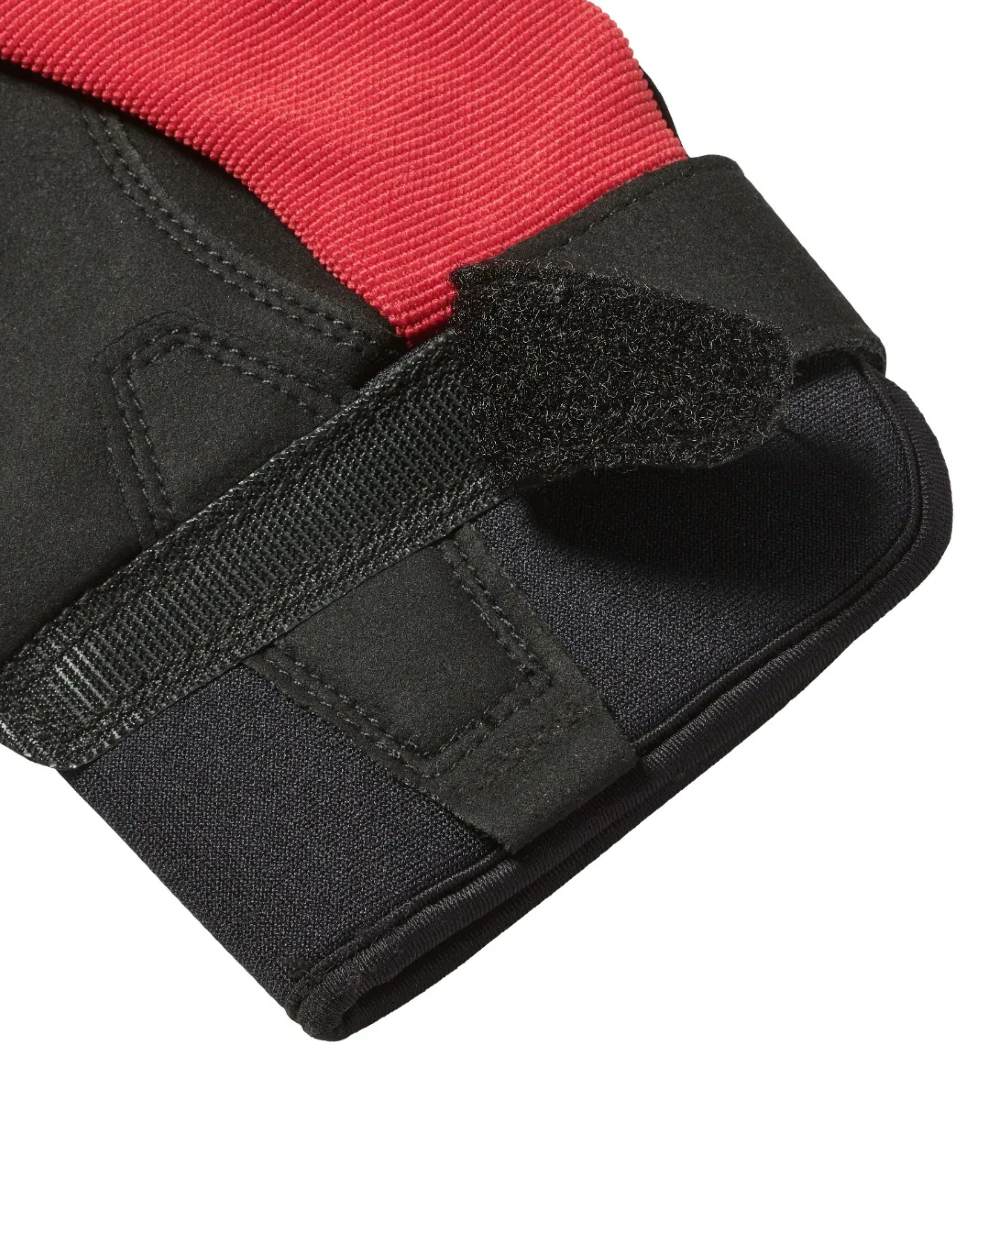 Musto Essential Sailing Short Finger Gloves in True Red 